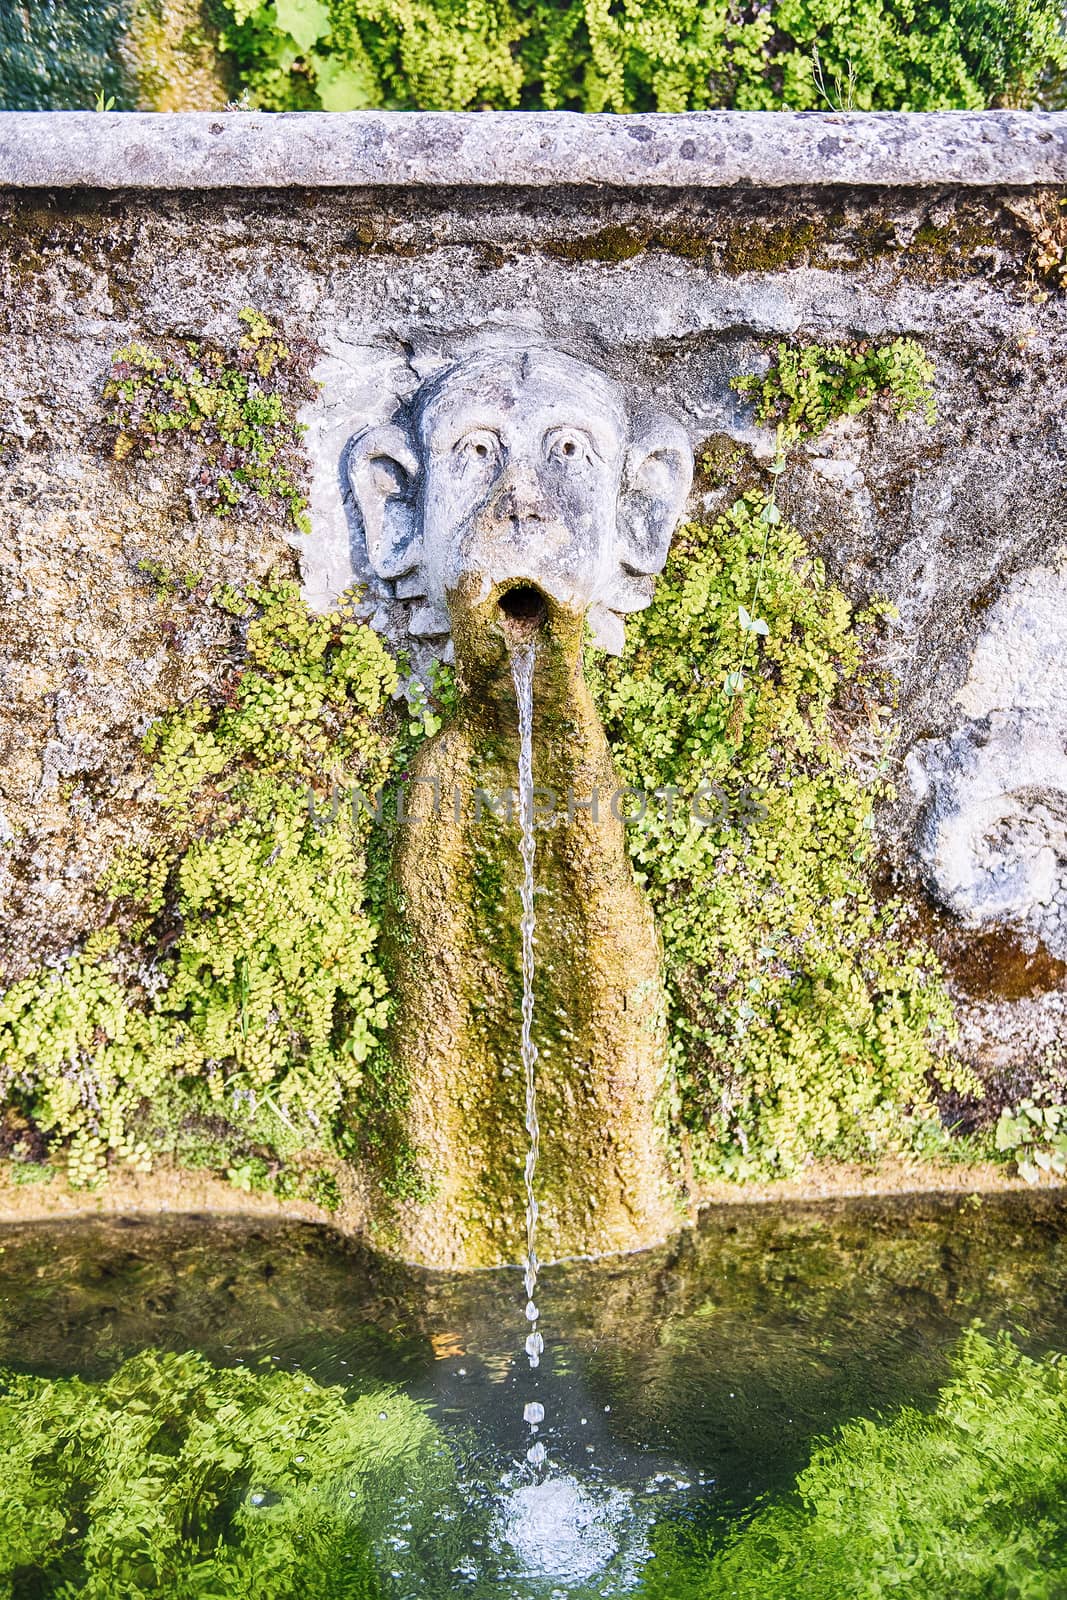 The hundred fountains, Villa d'Este, Tivoli, Italy by marcorubino